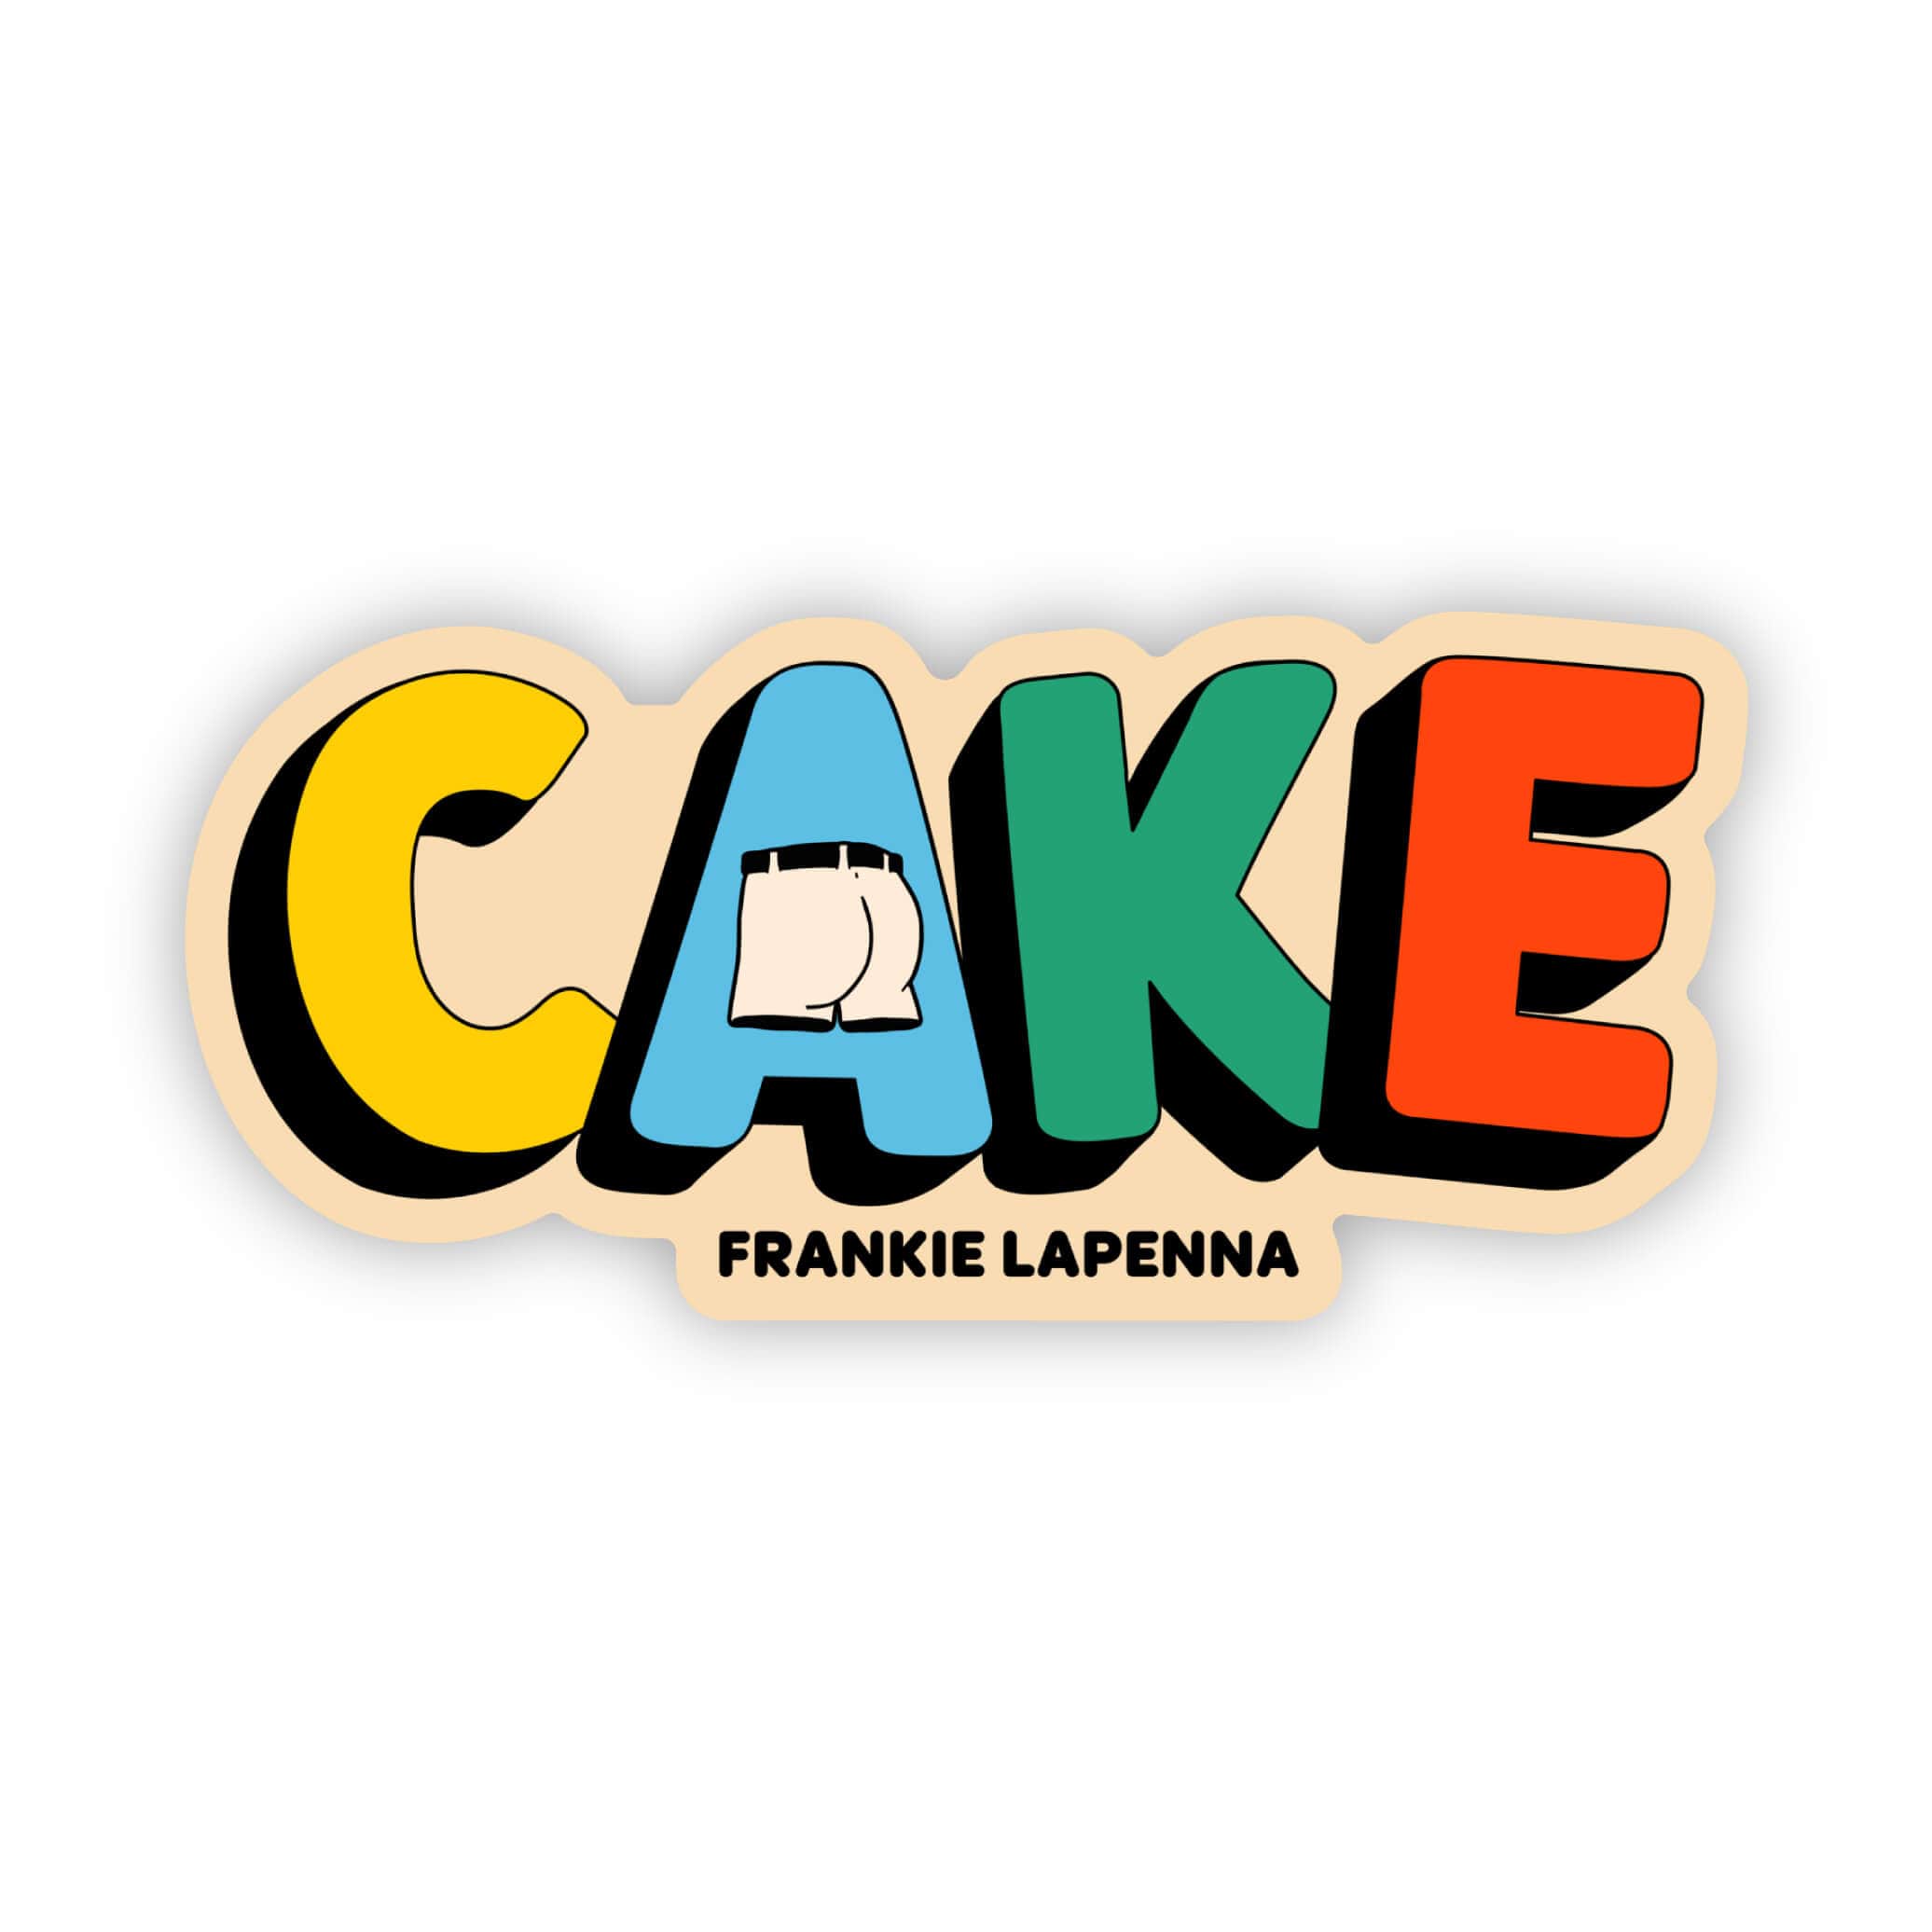 Frankie's Cake - Cupcake Shop